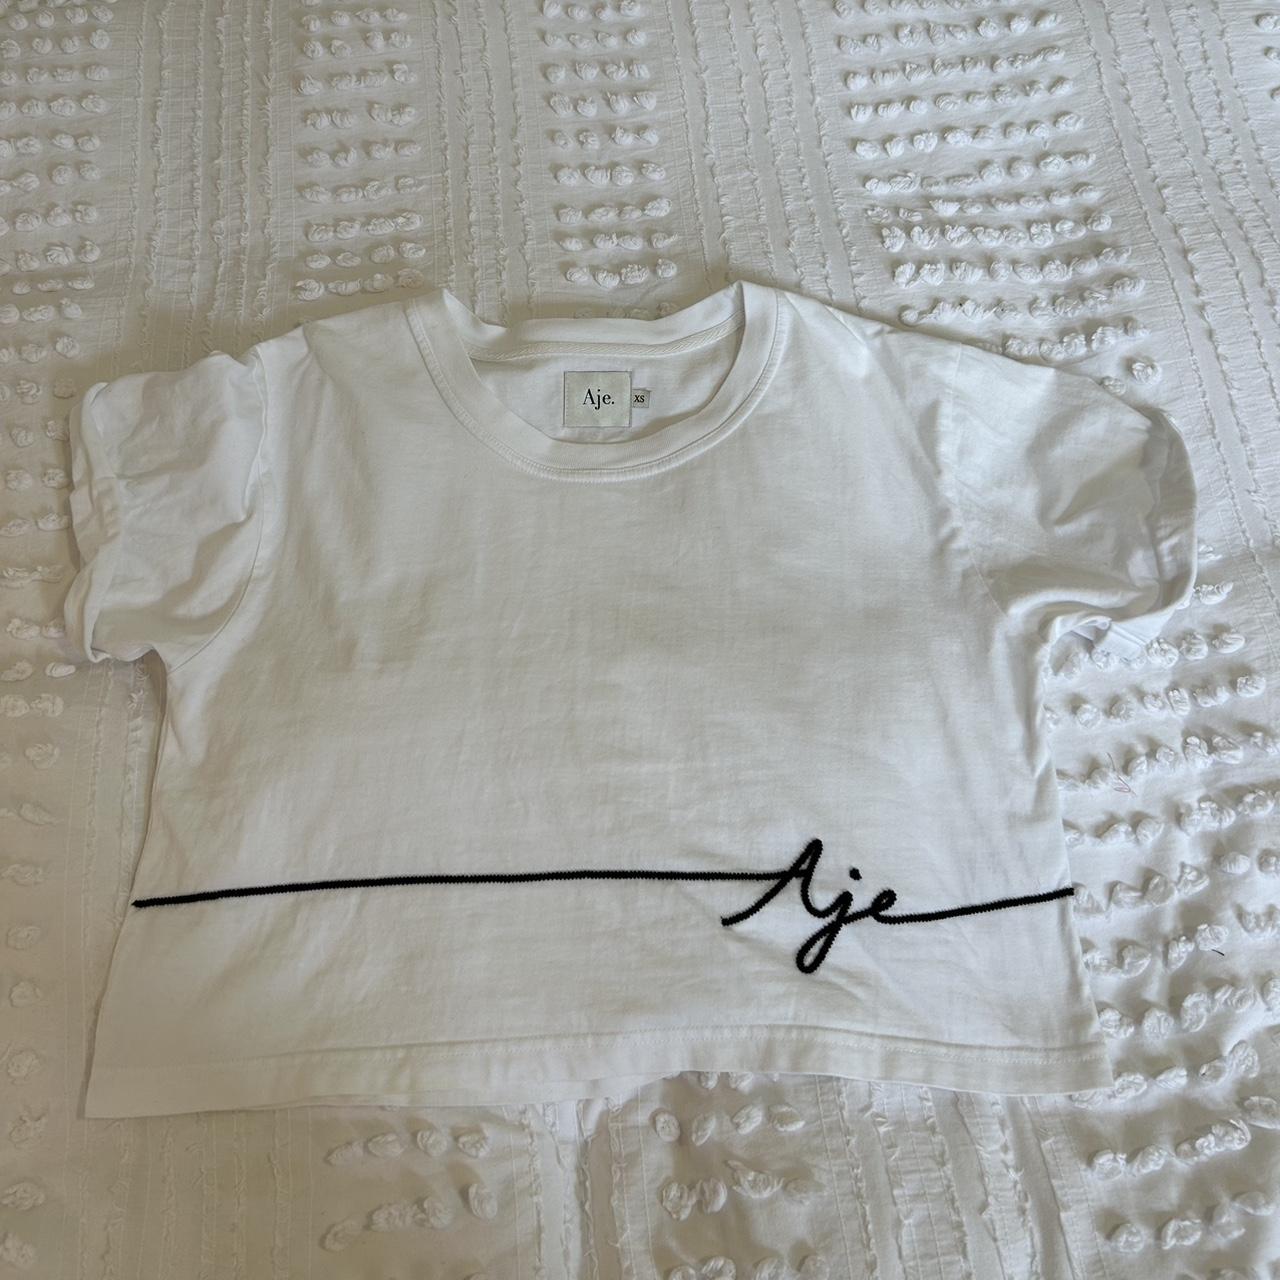 Aje Women's White and Black T-shirt | Depop